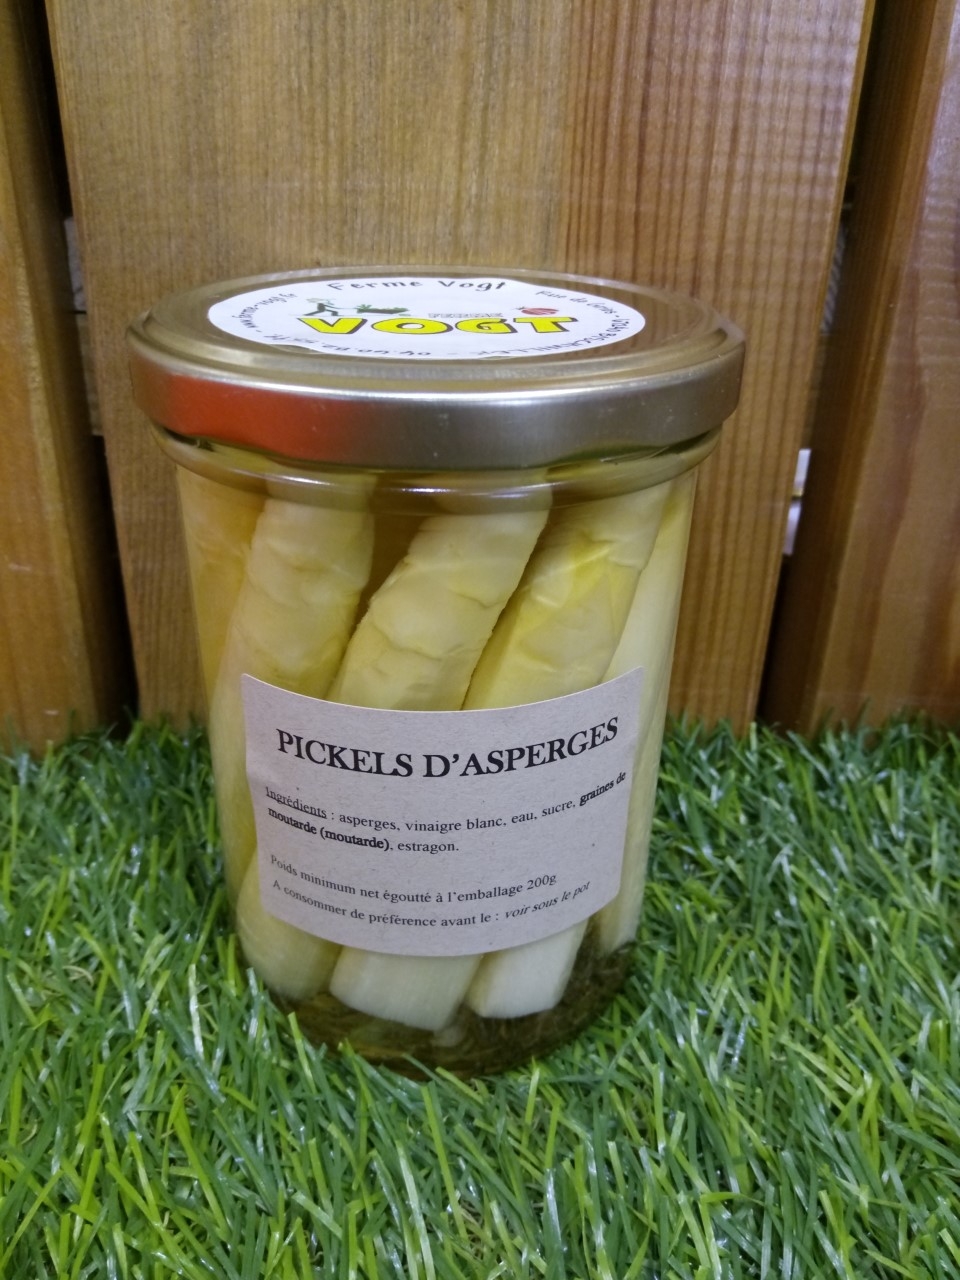 Pickels d'asperges - 1 u - Earl Ferme Vogt 